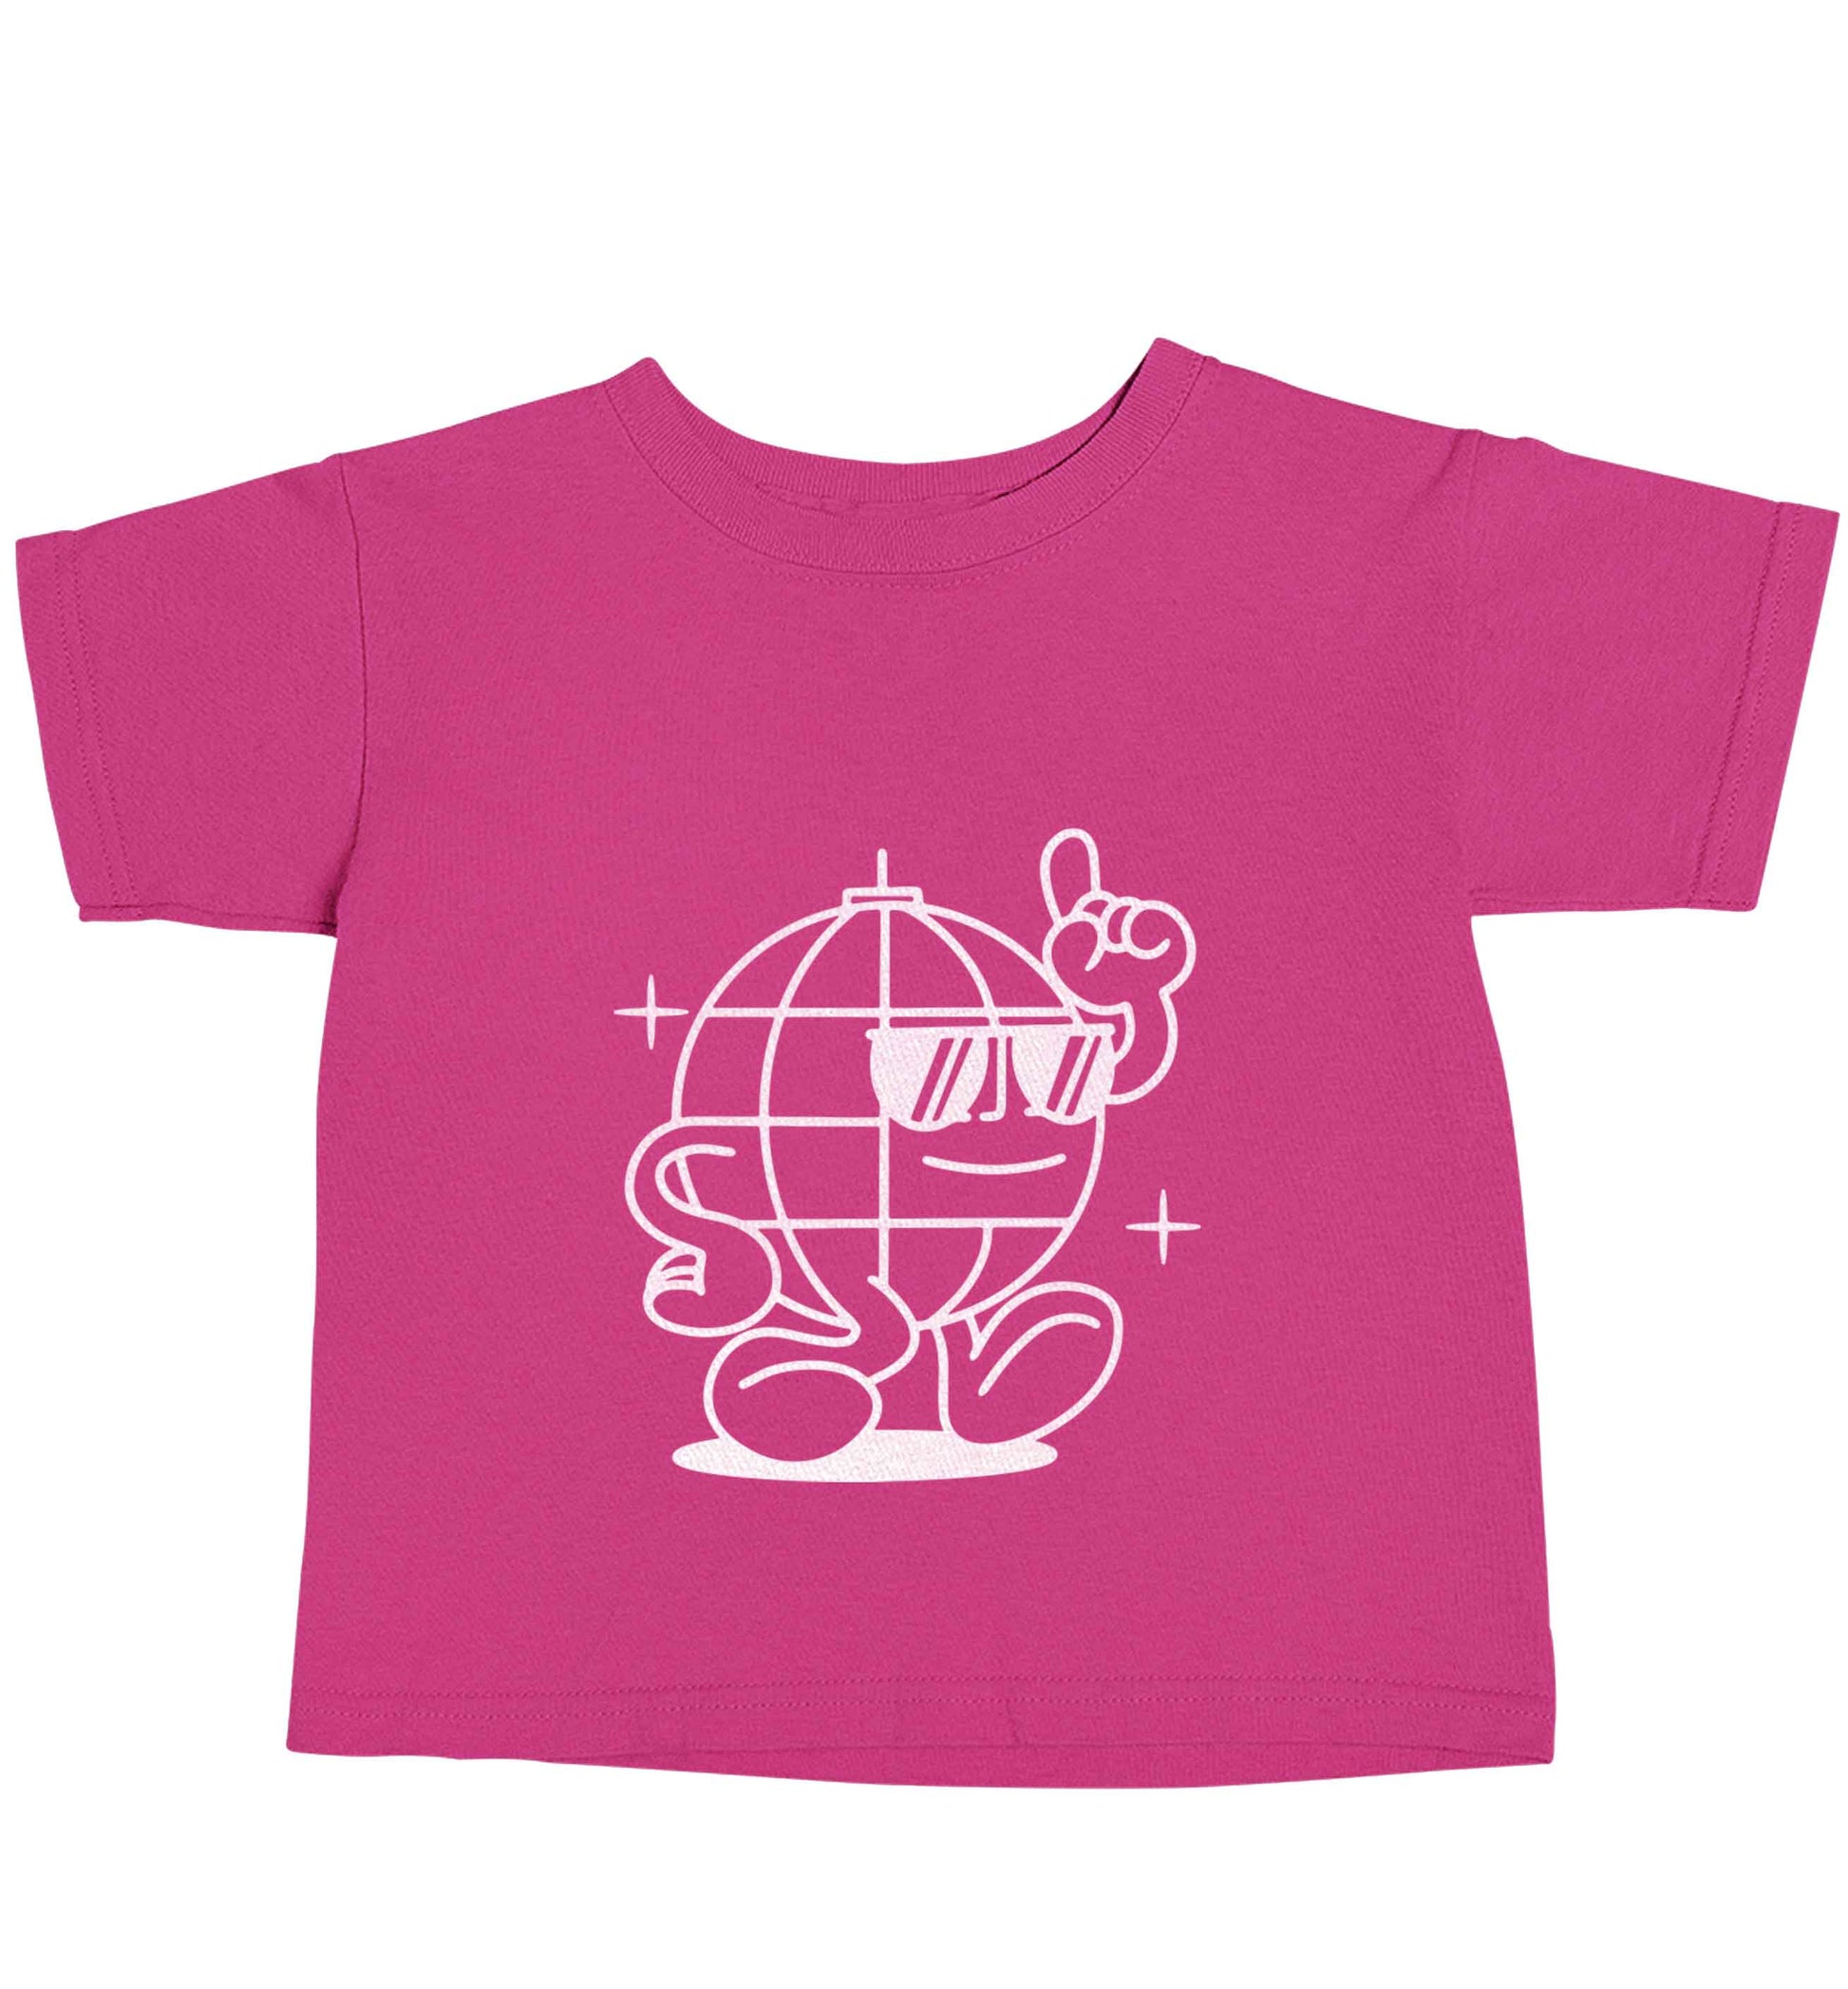 Disco ball pink baby toddler Tshirt 2 Years